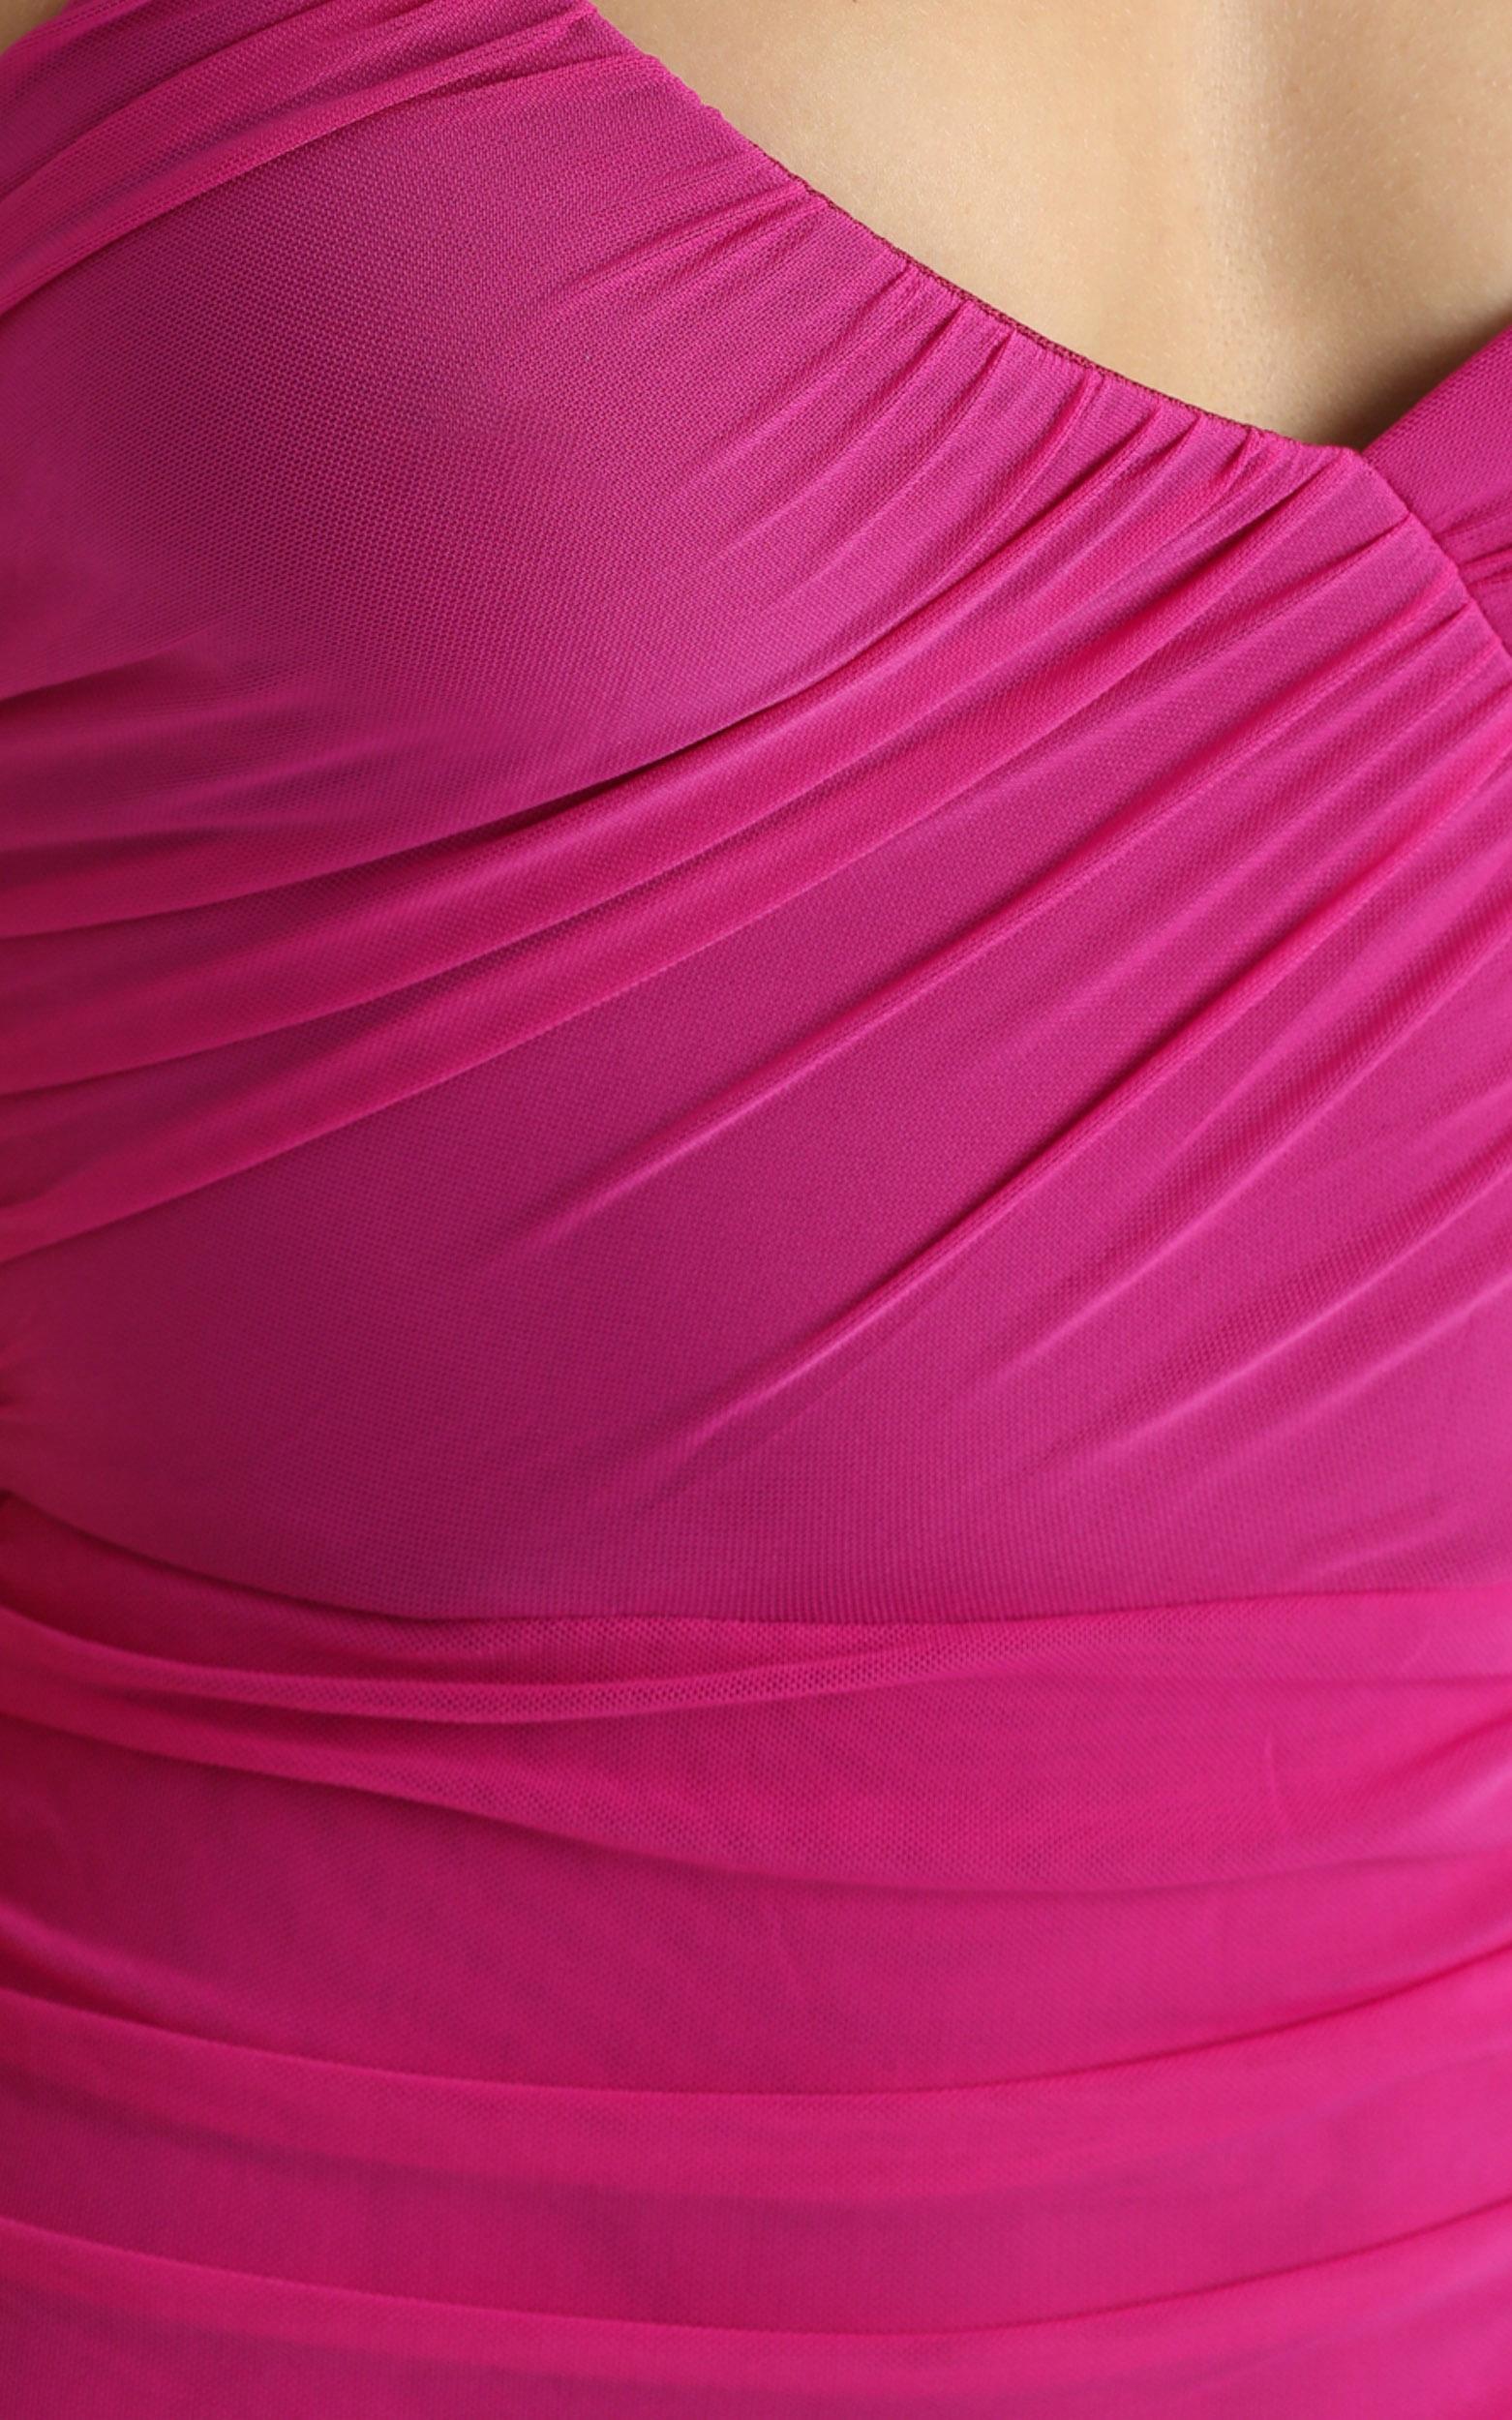 Gigi Dress in hot pink mesh | Showpo USA